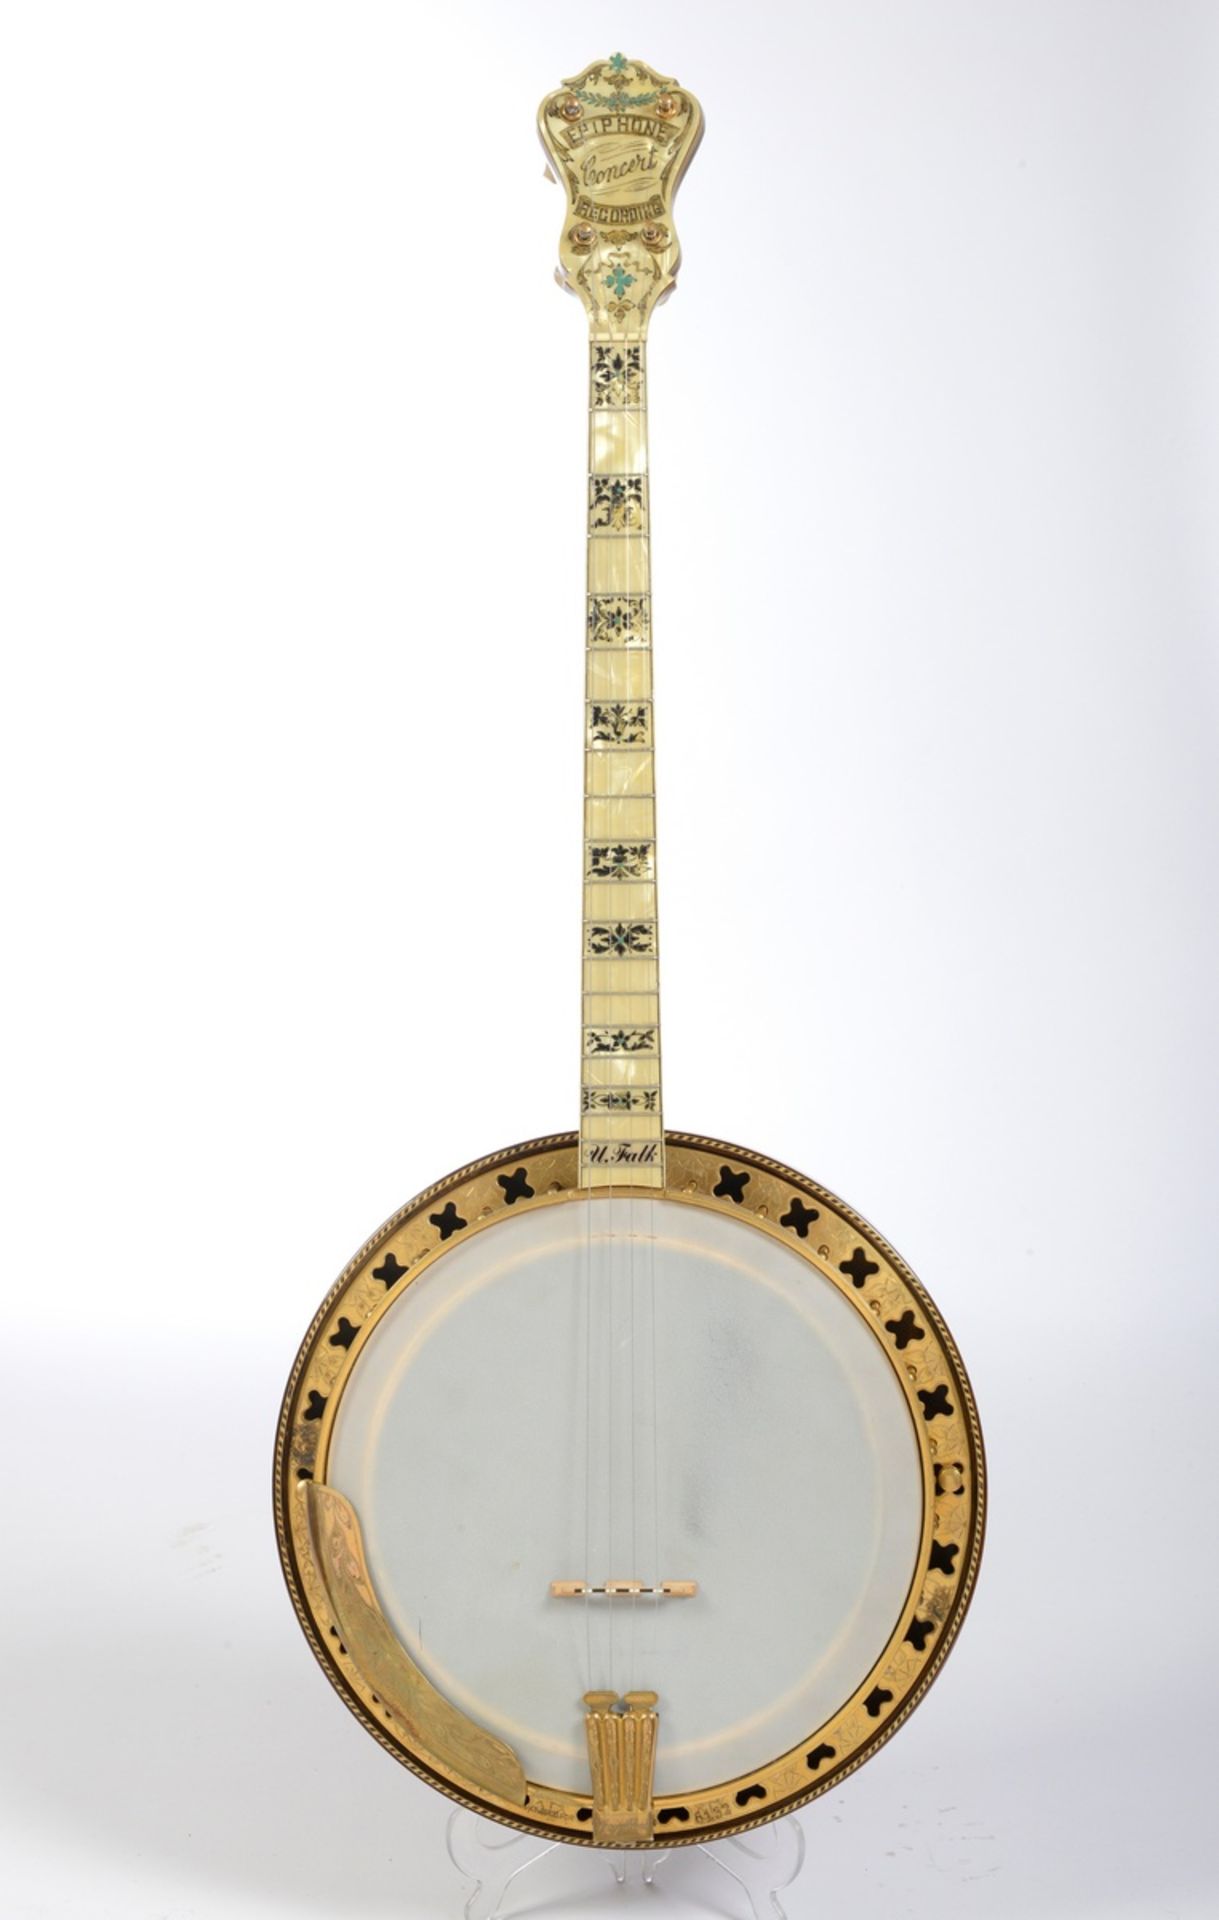 Tenor Banjo, Epiphone Banjo Company, House of Strathopoulo Inc. New York, model Recording Art Conce - Image 2 of 24